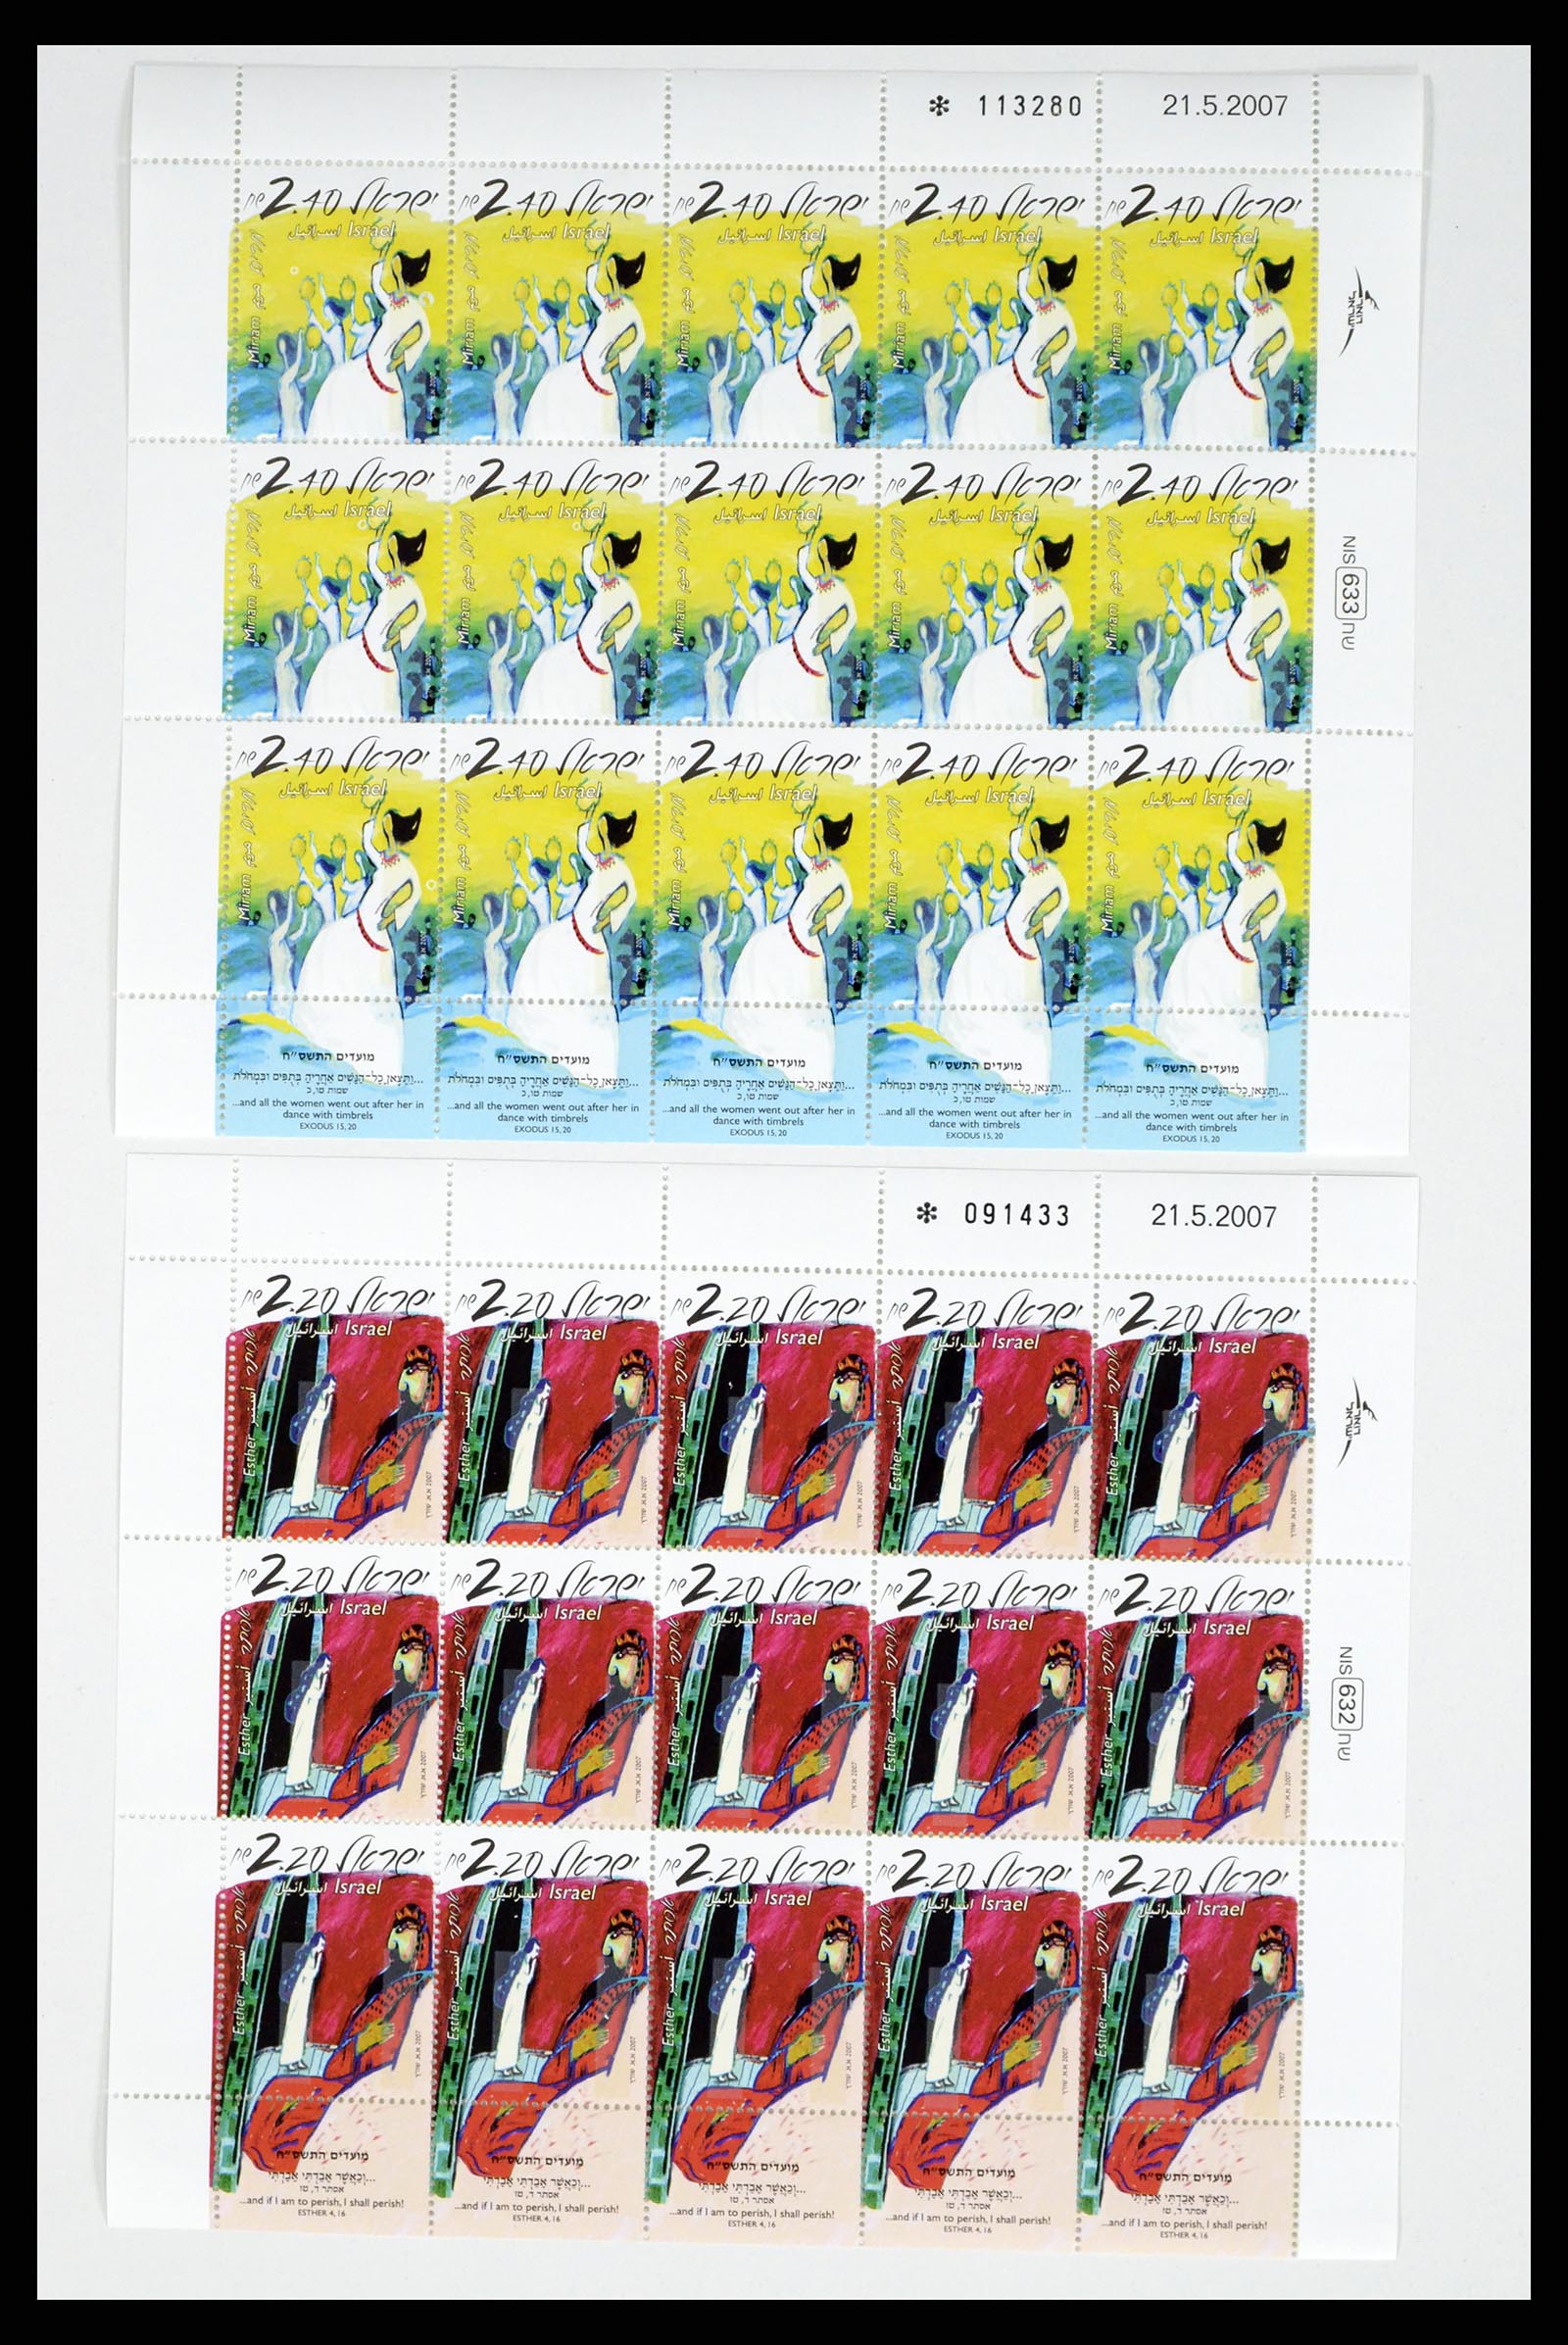 37779 042 - Stamp collection 37779 Israel sheetlets 1986-2009.